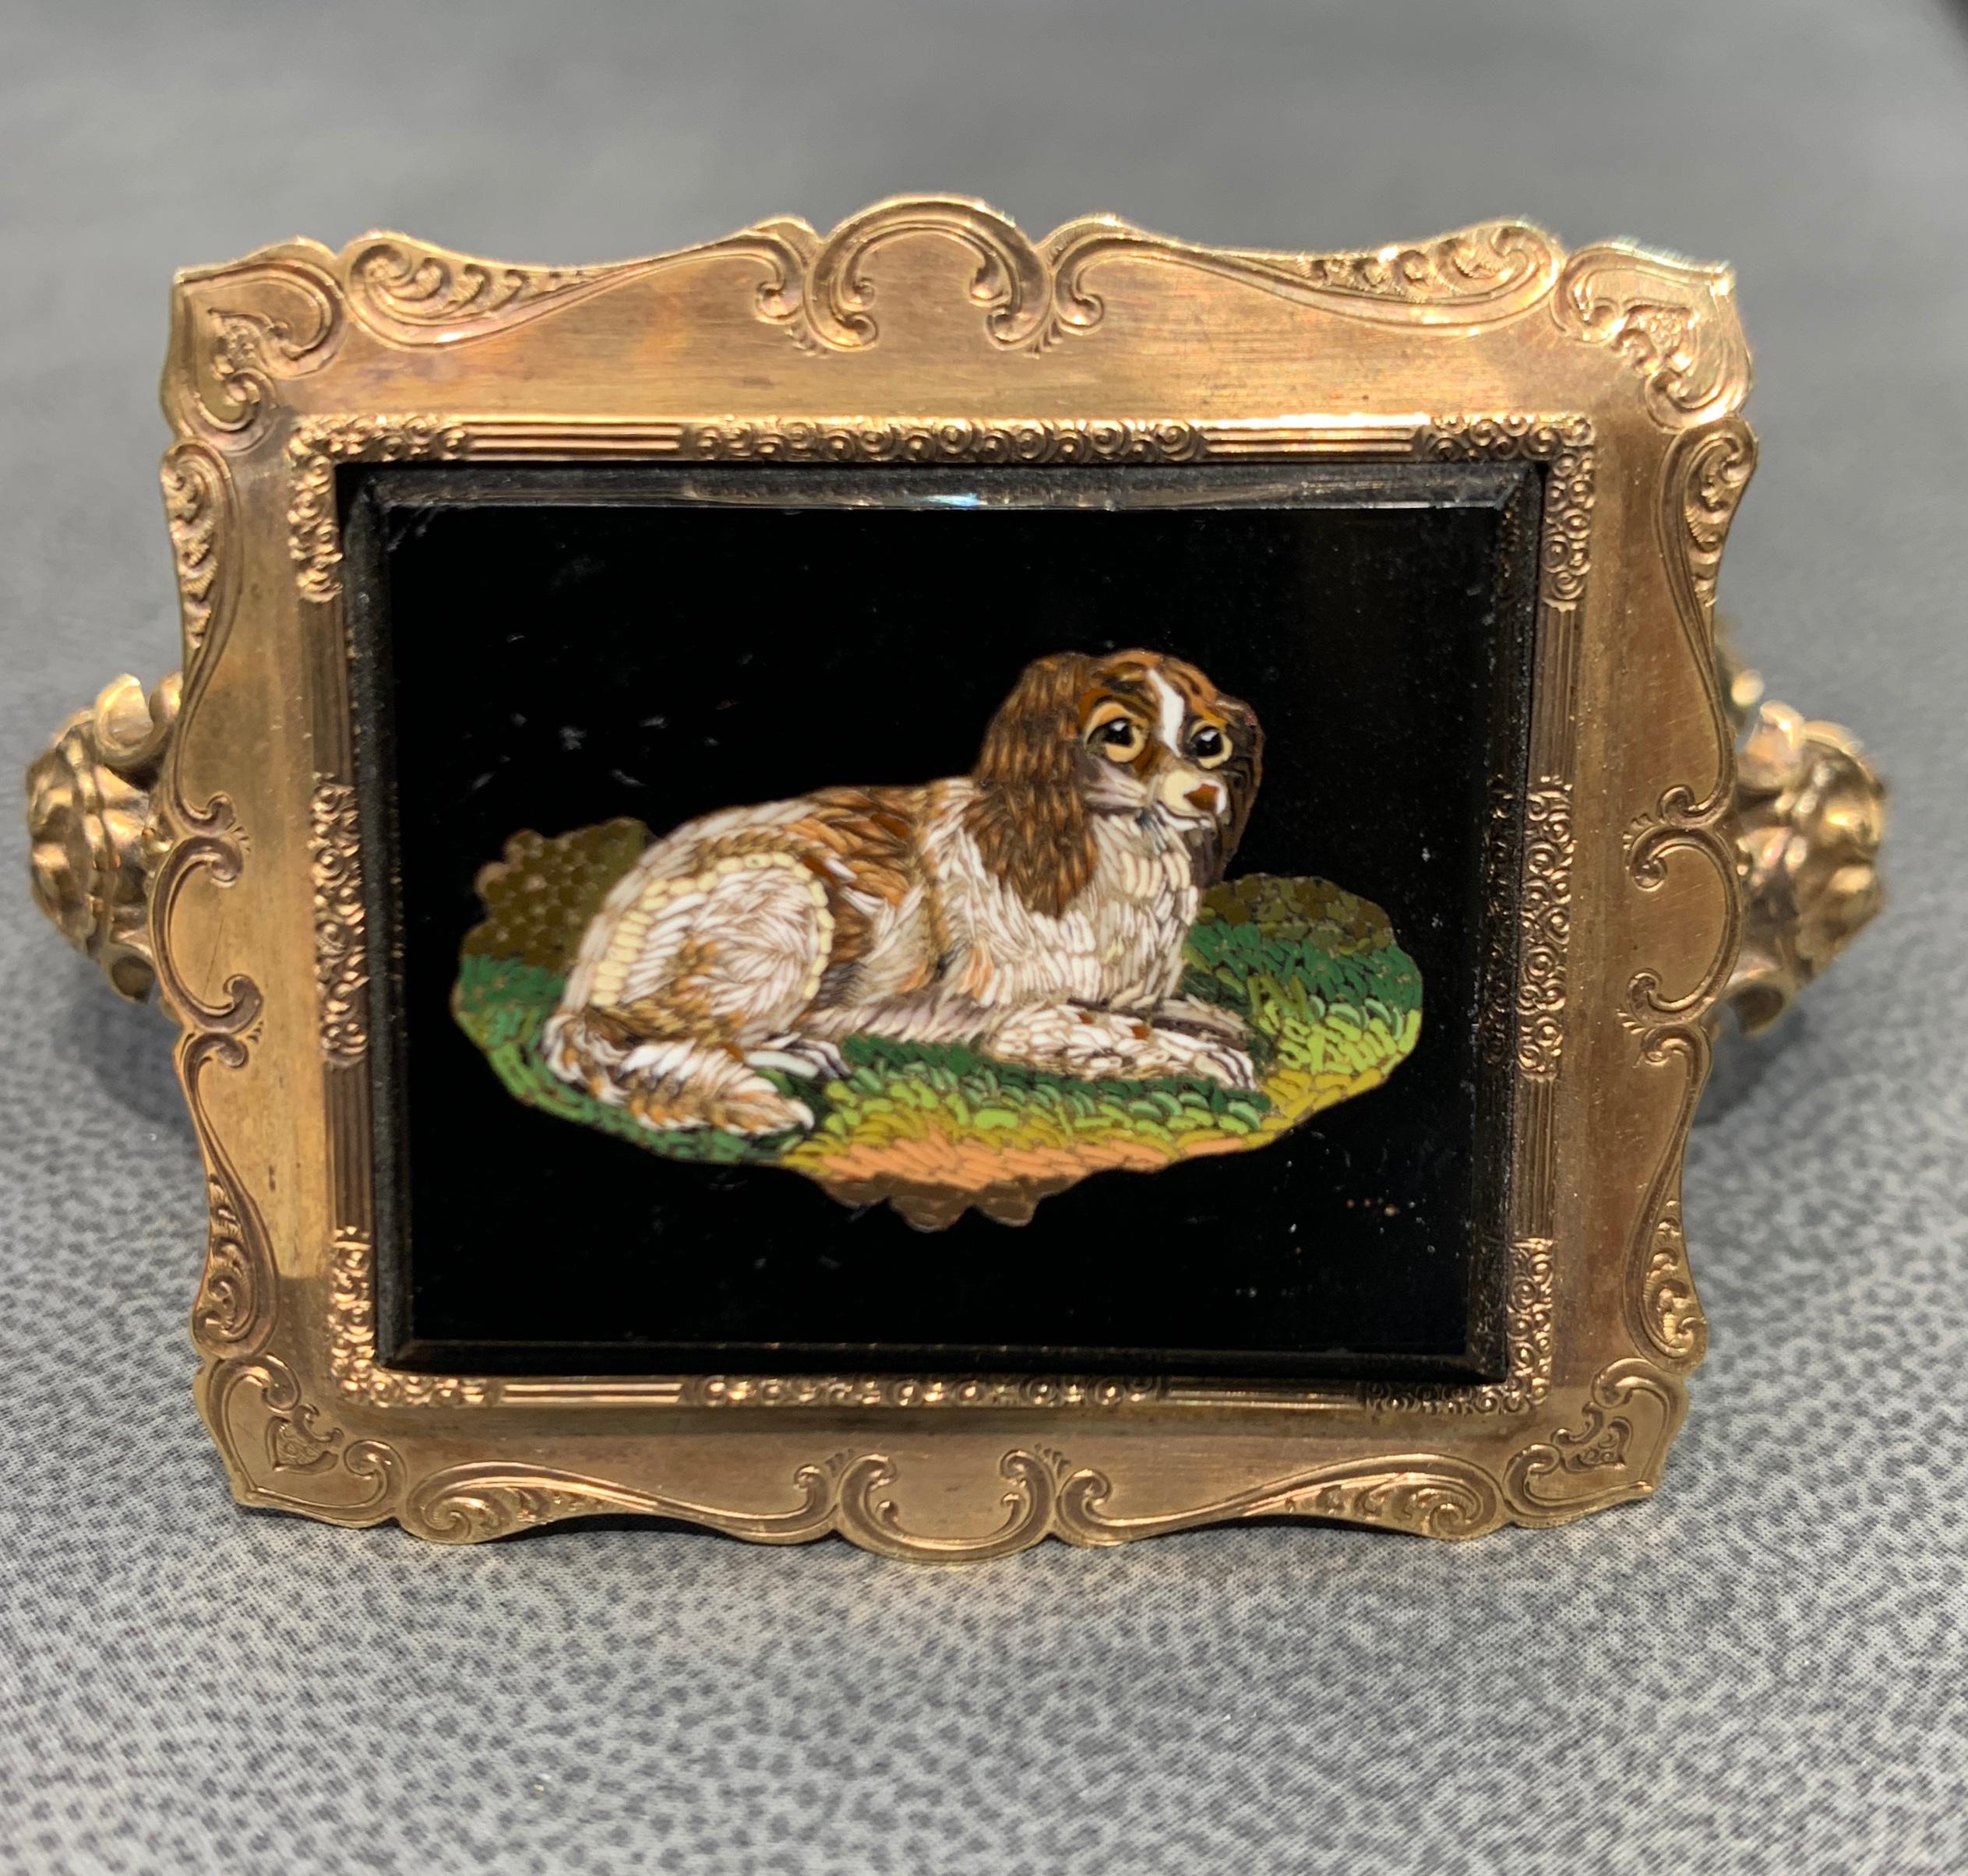 Gold Antique Dog Micro Mosaic Bangle Circa 1900
Approx 2.5